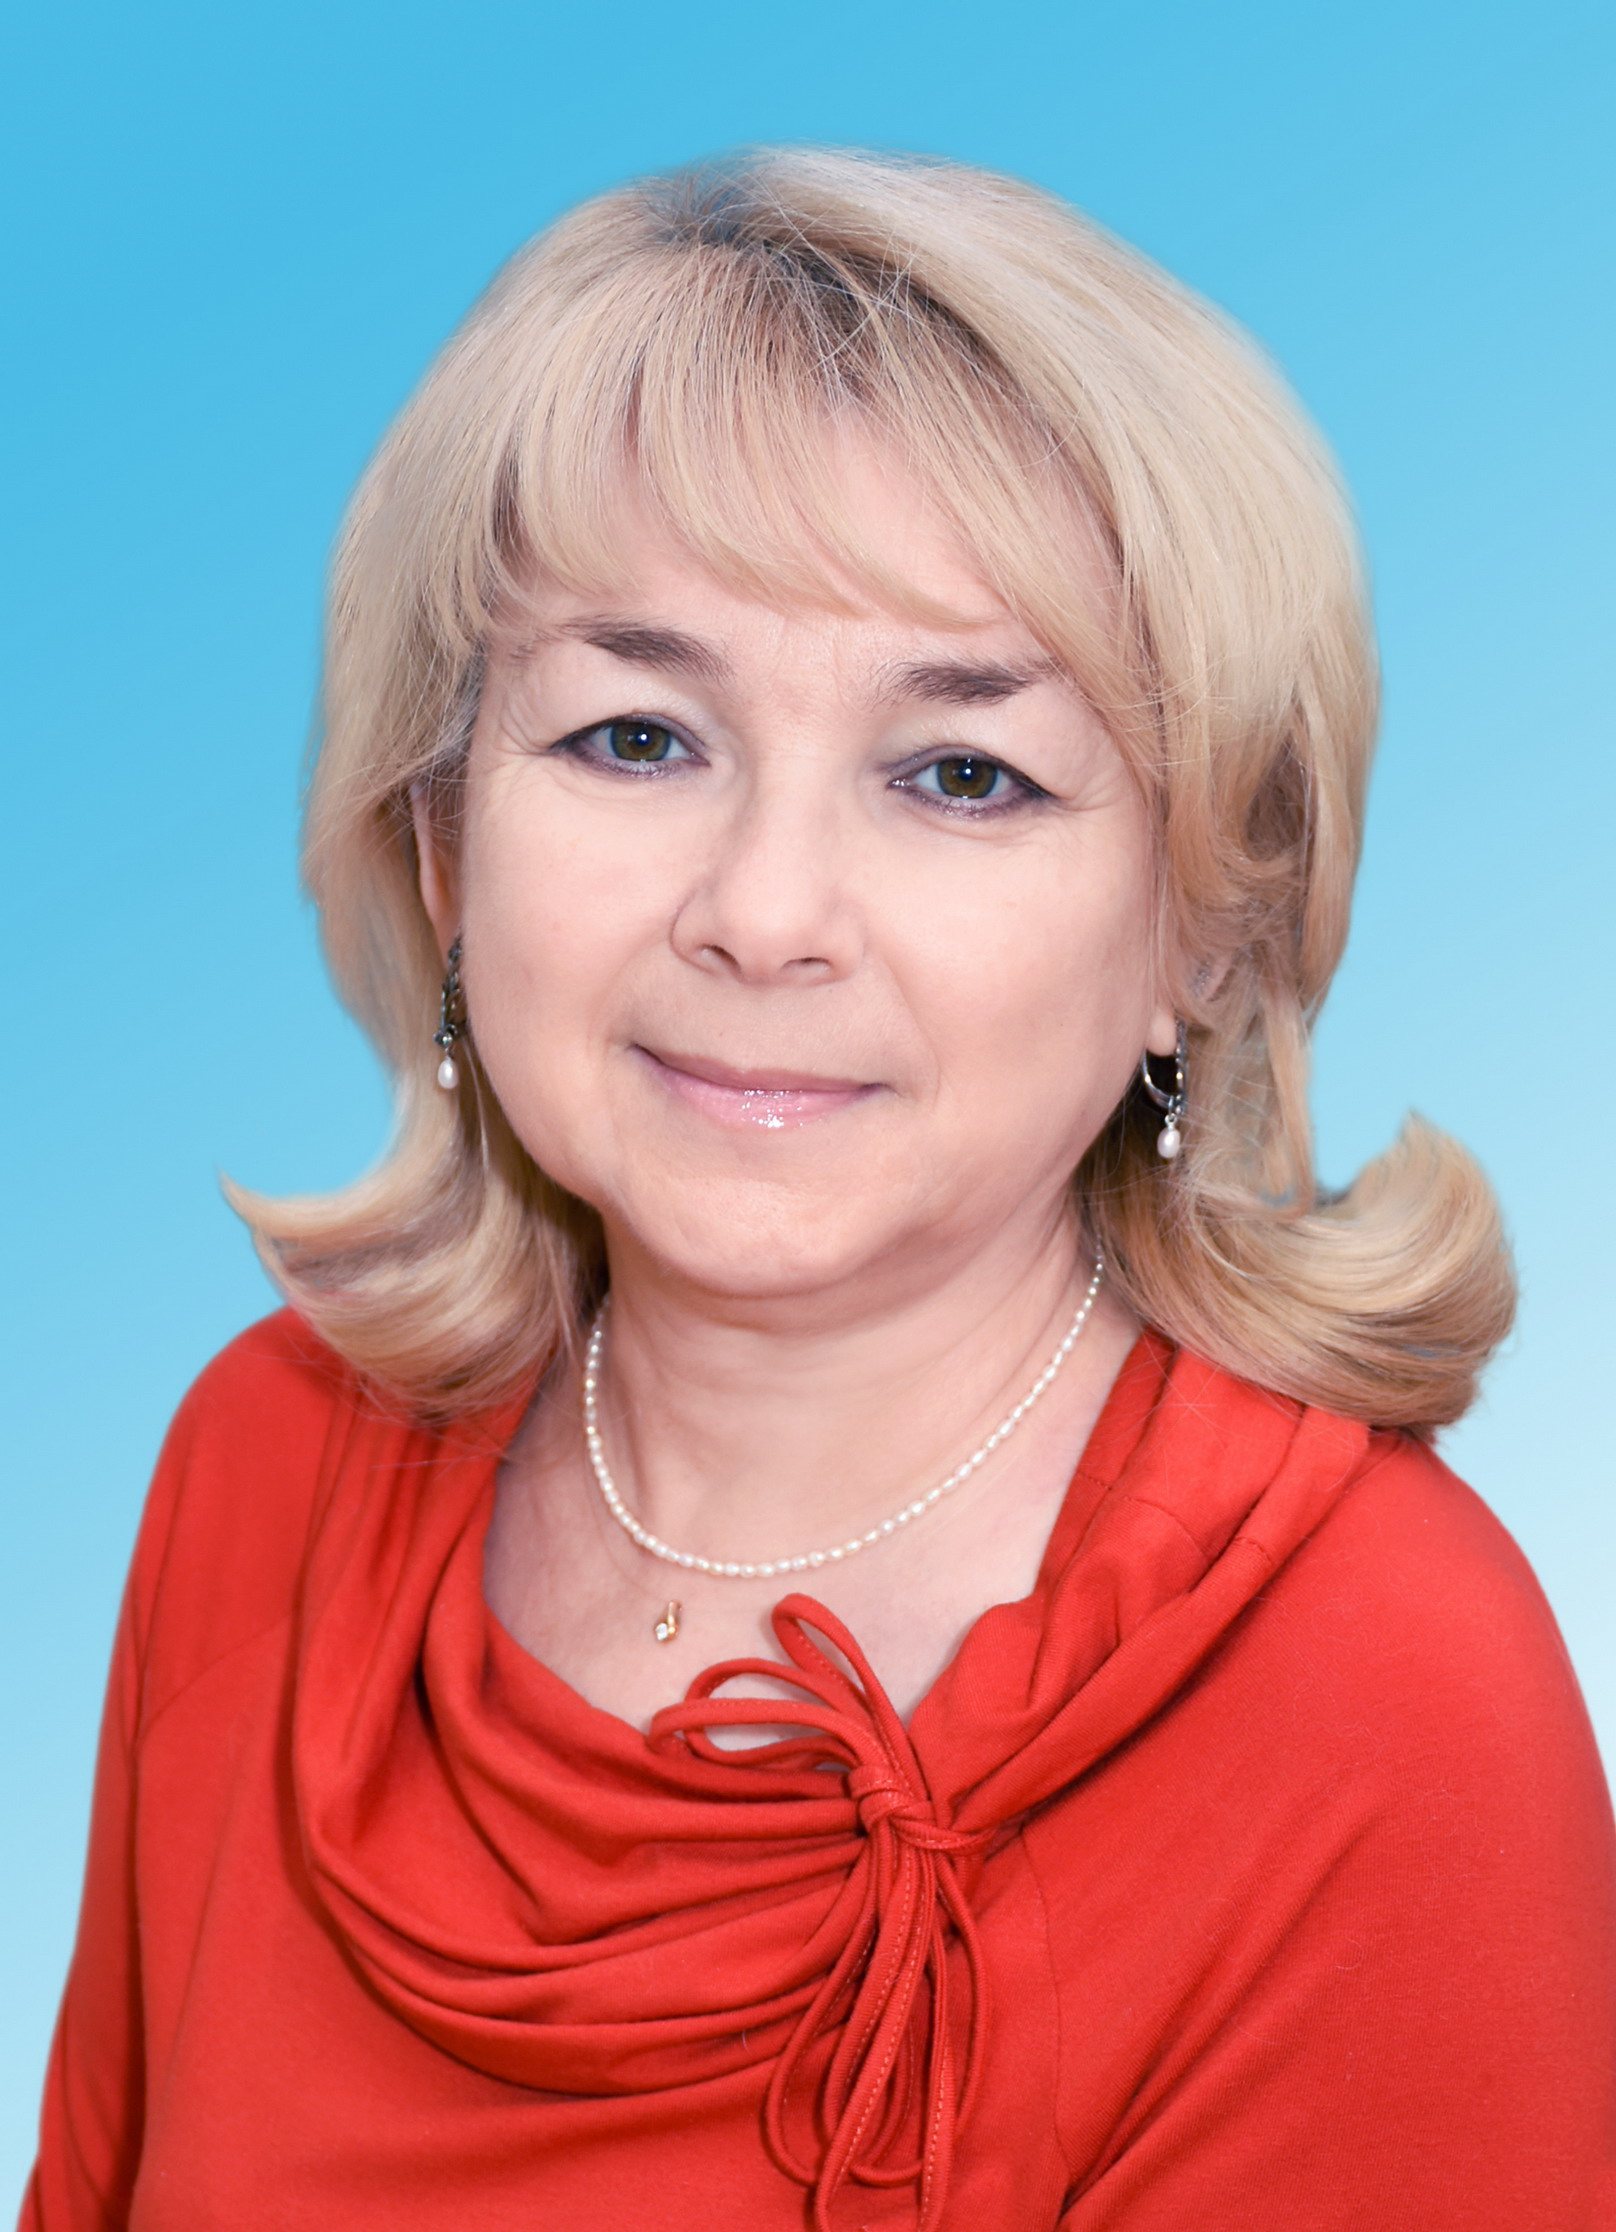 Никитина Ольга Михайловна